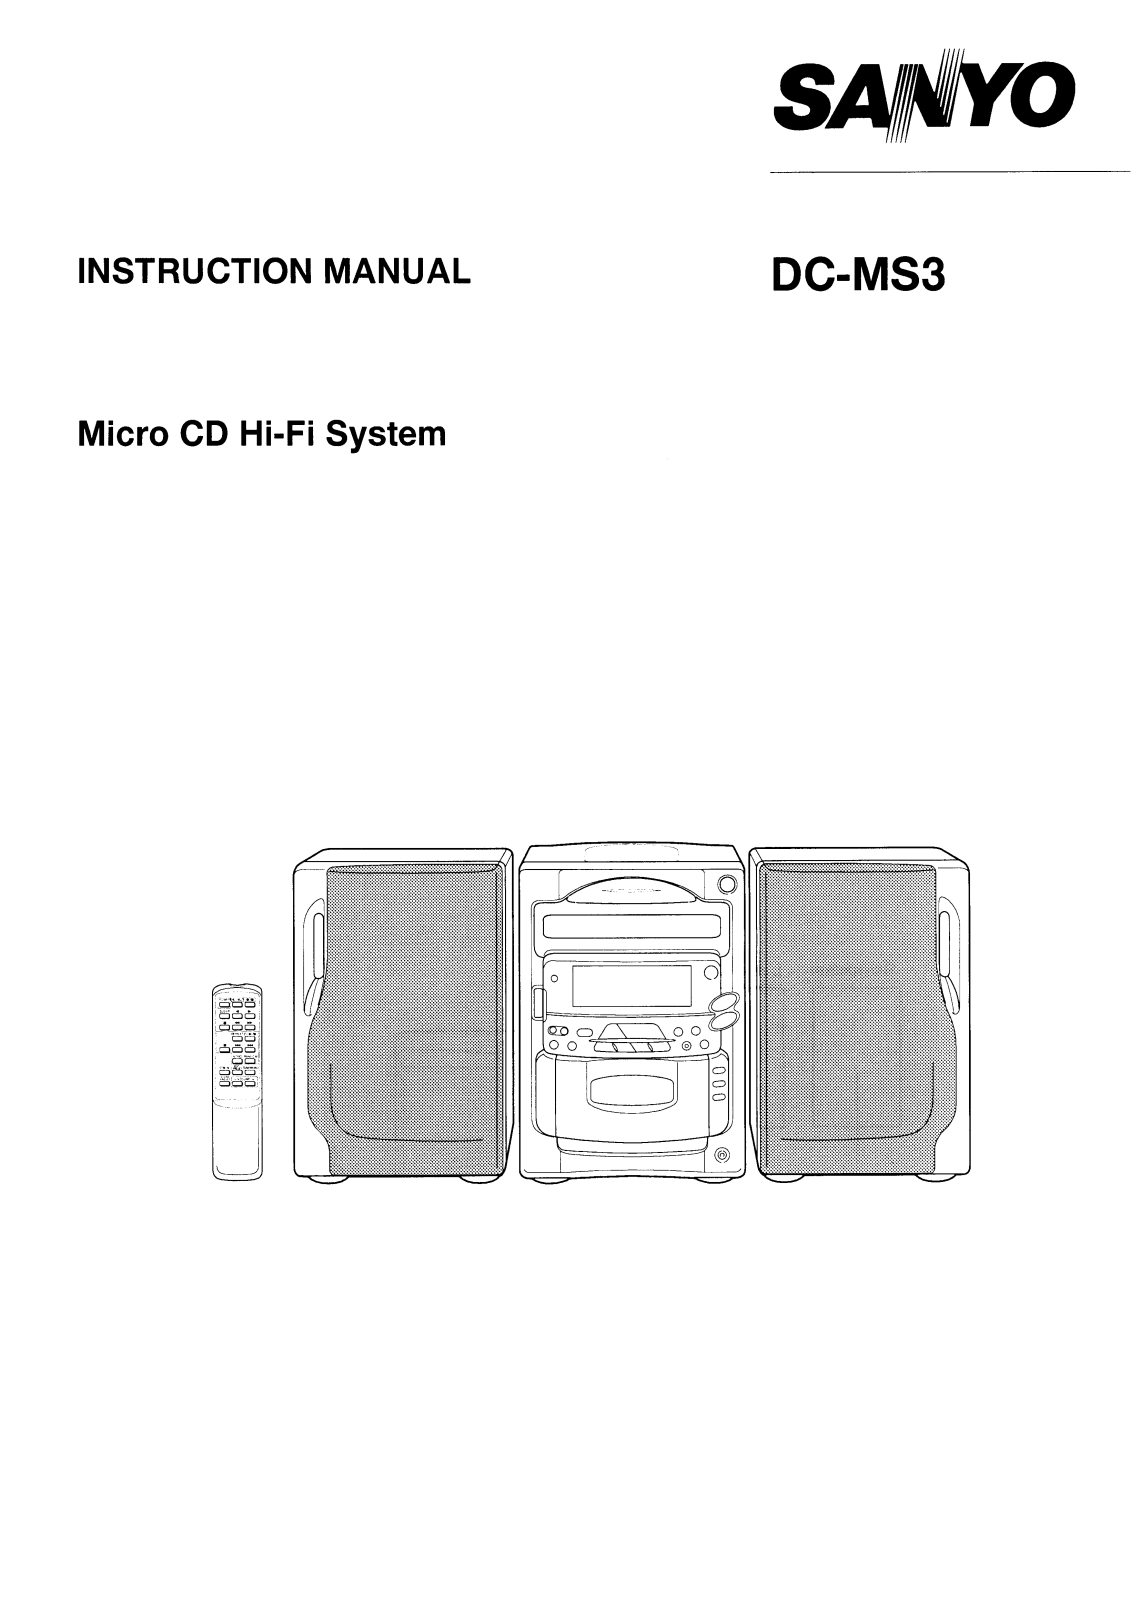 Sanyo DC-MS3 Instruction Manual